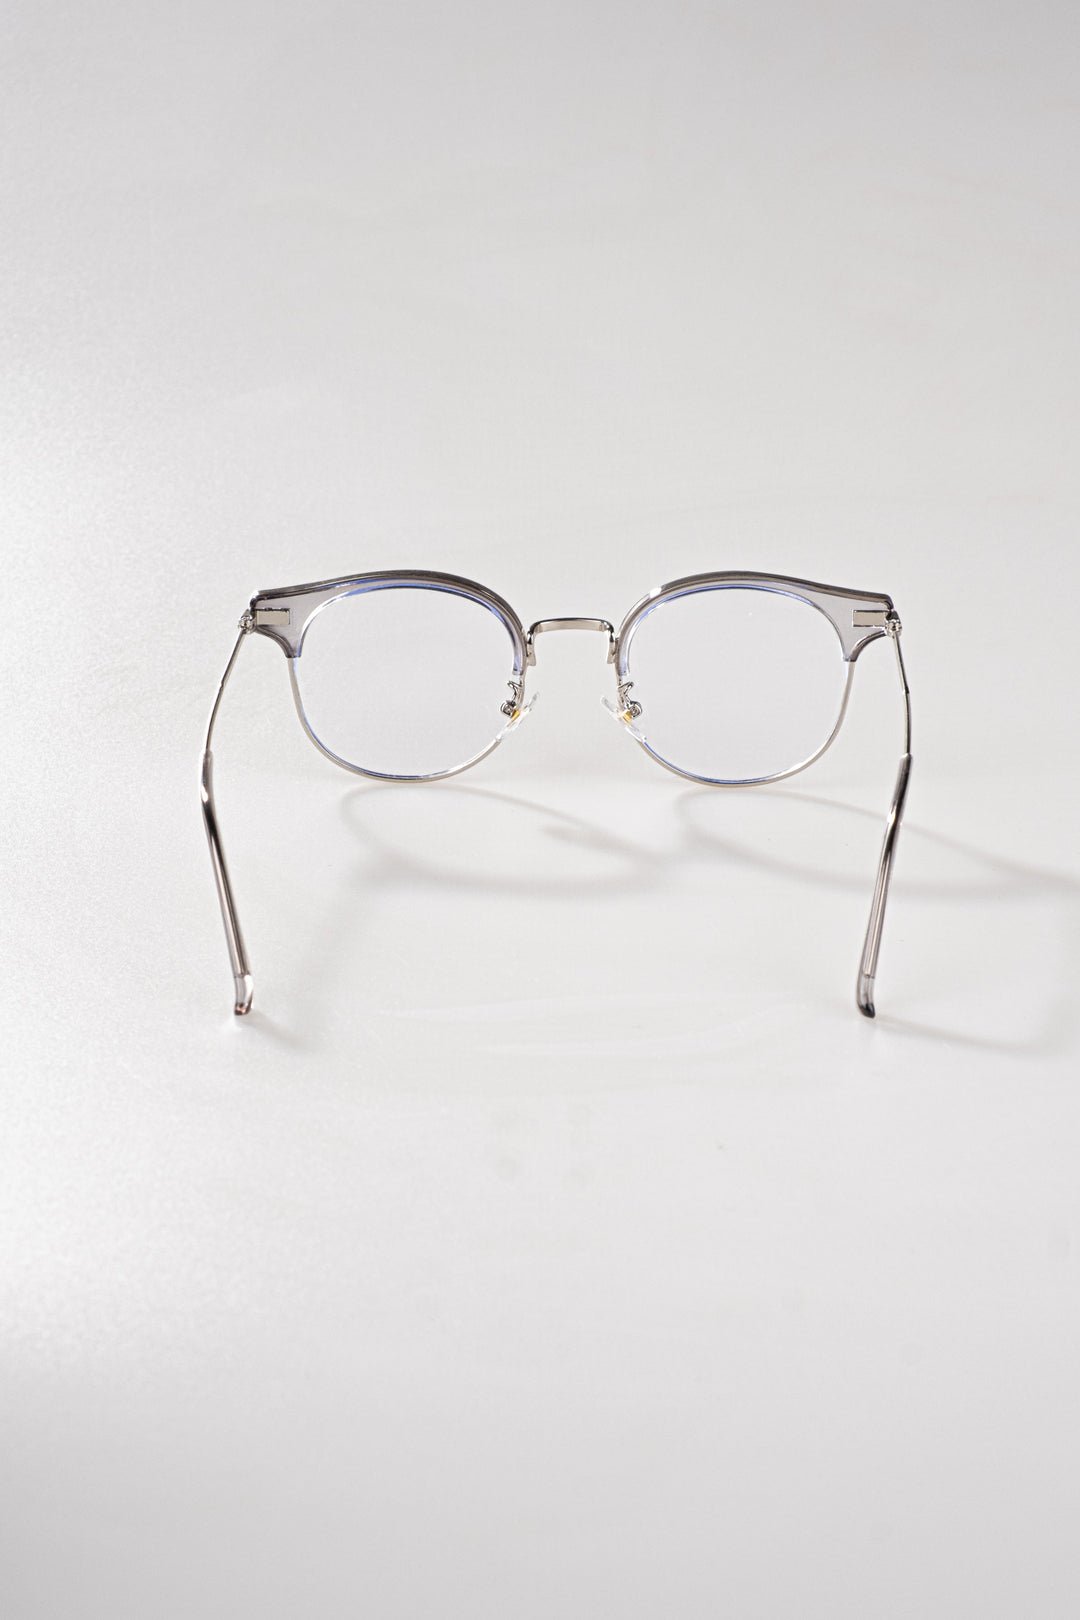 Floyd Blue Light Protection Glasses